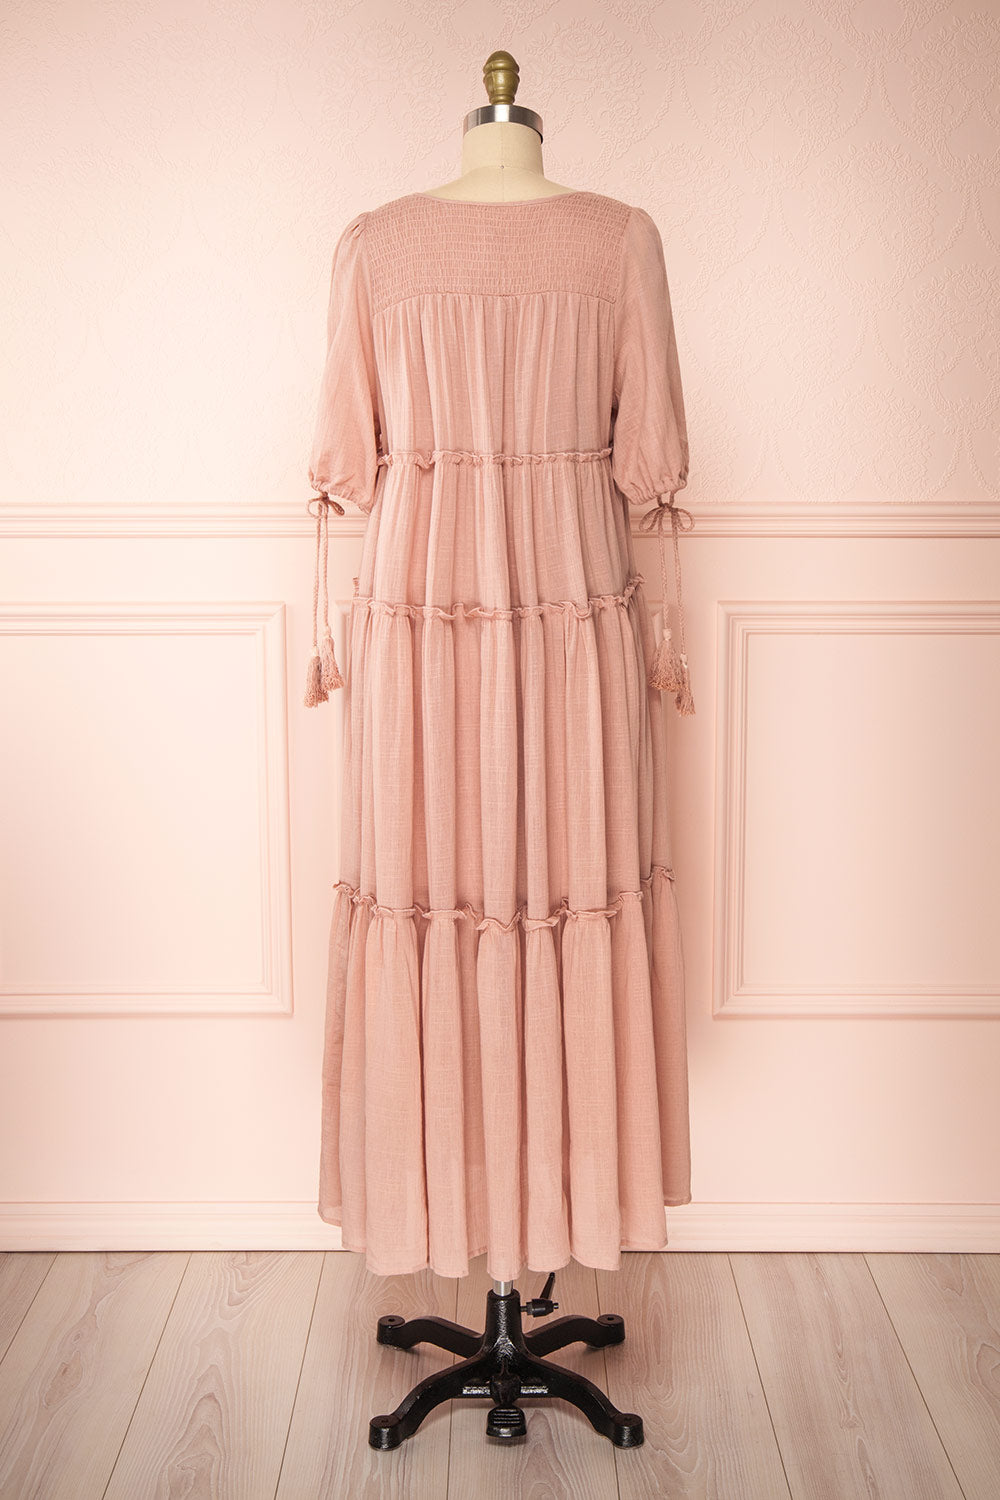 Kieu Pink Flowy Layered Maxi Dress | Boutique 1861 back view 